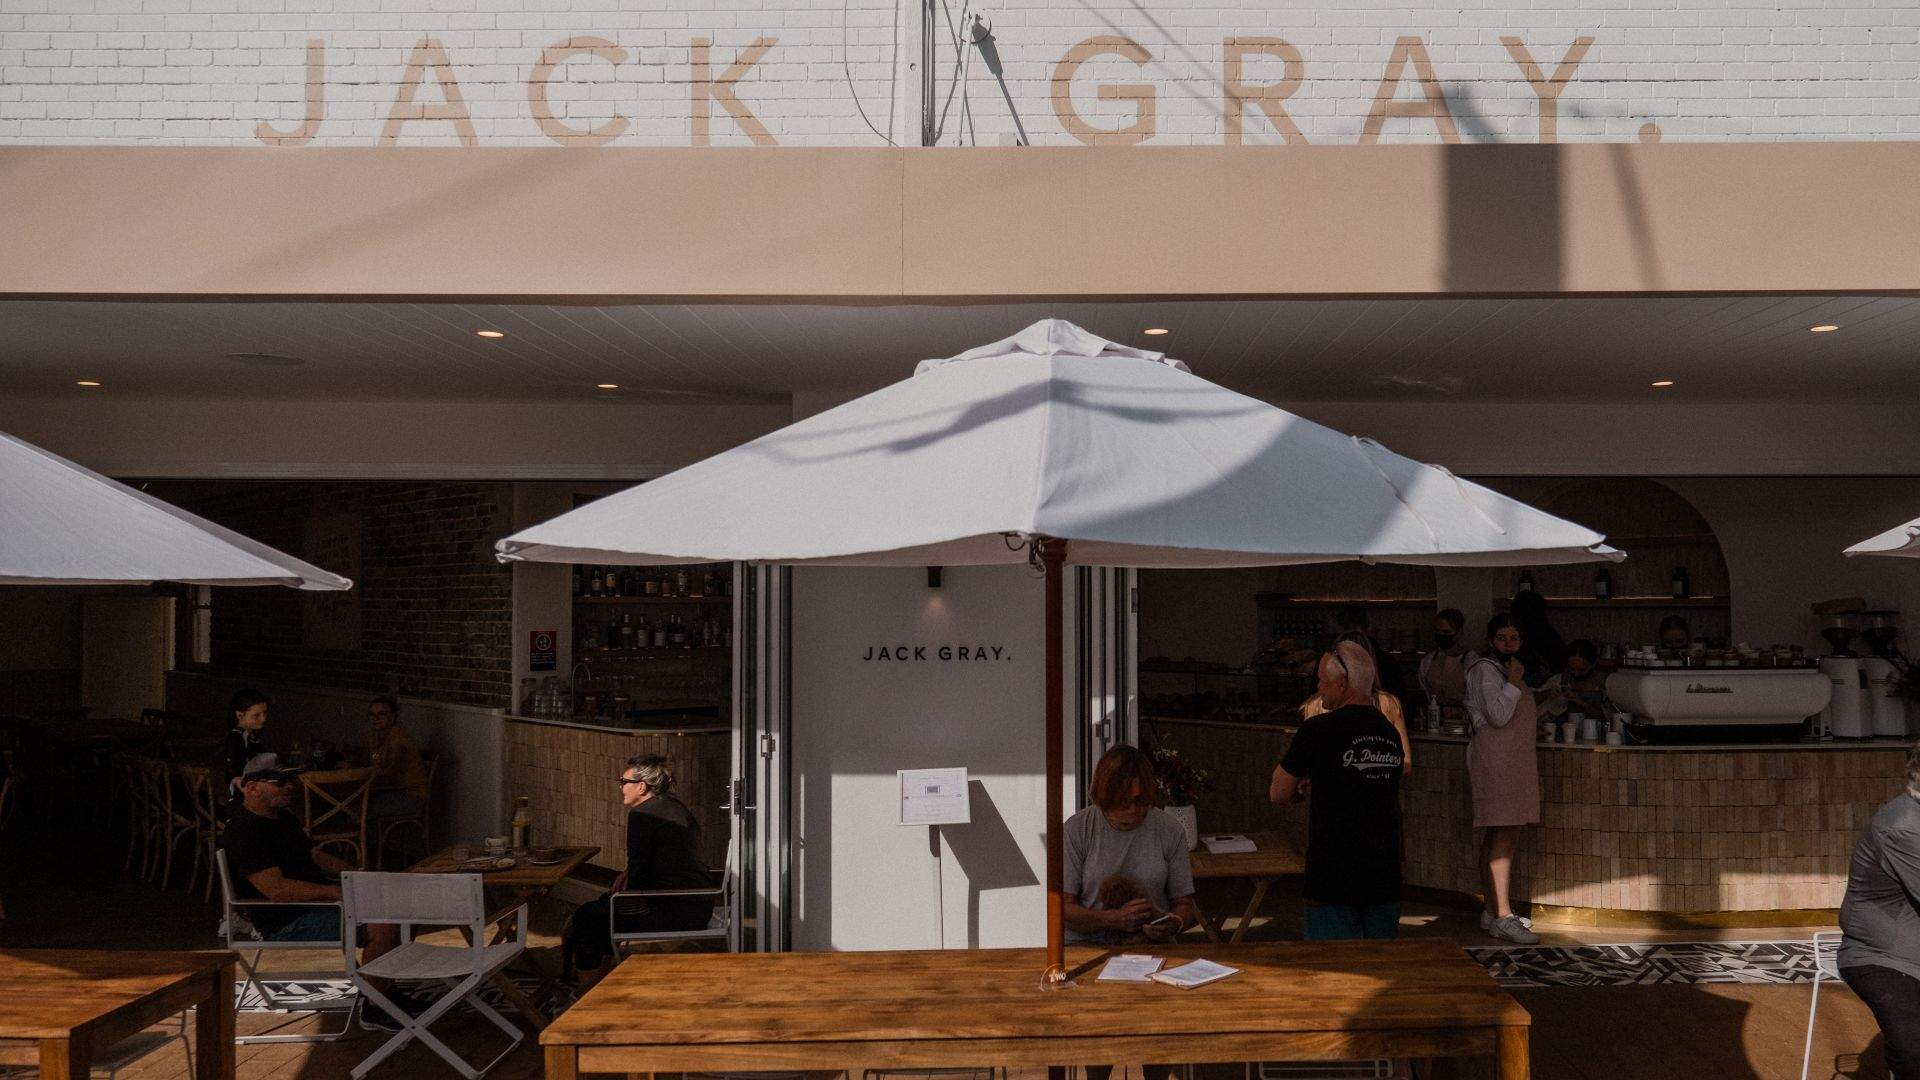 Sleek New South Sydney Cafe Jack Gray Is a Neighbourhood Cafe by Day, Wine Bar by Night